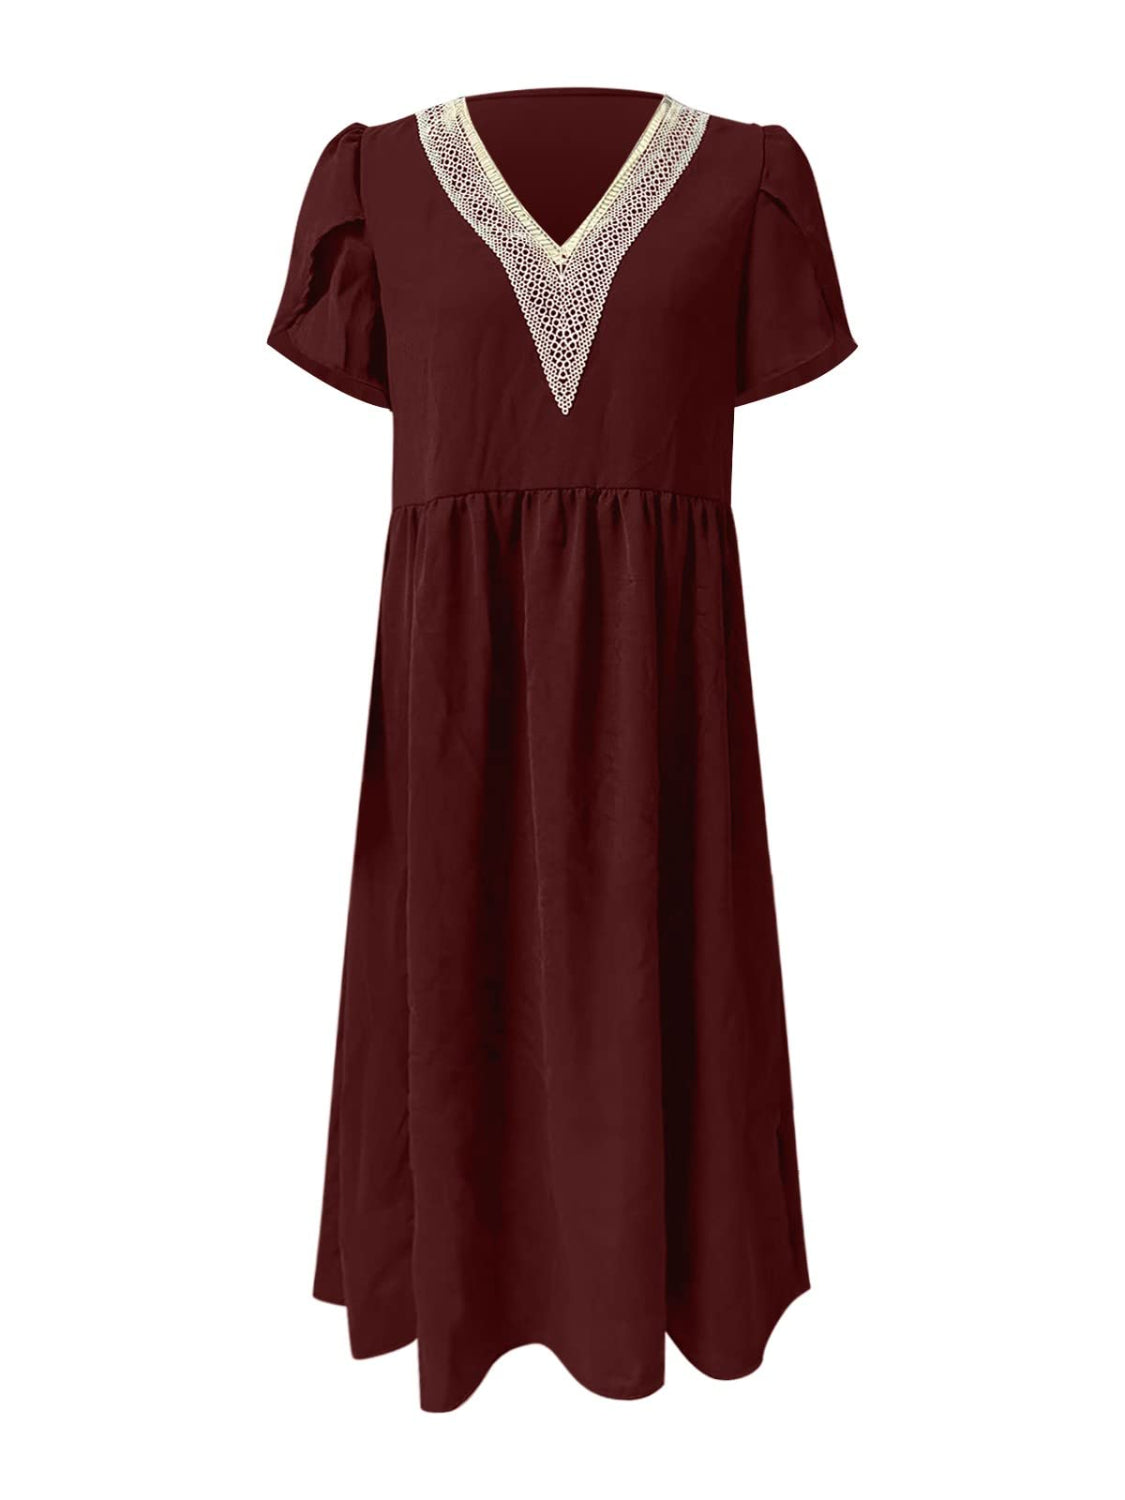 STUNNLY  Full Size Lace Detail V-Neck Short Sleeve Dress   